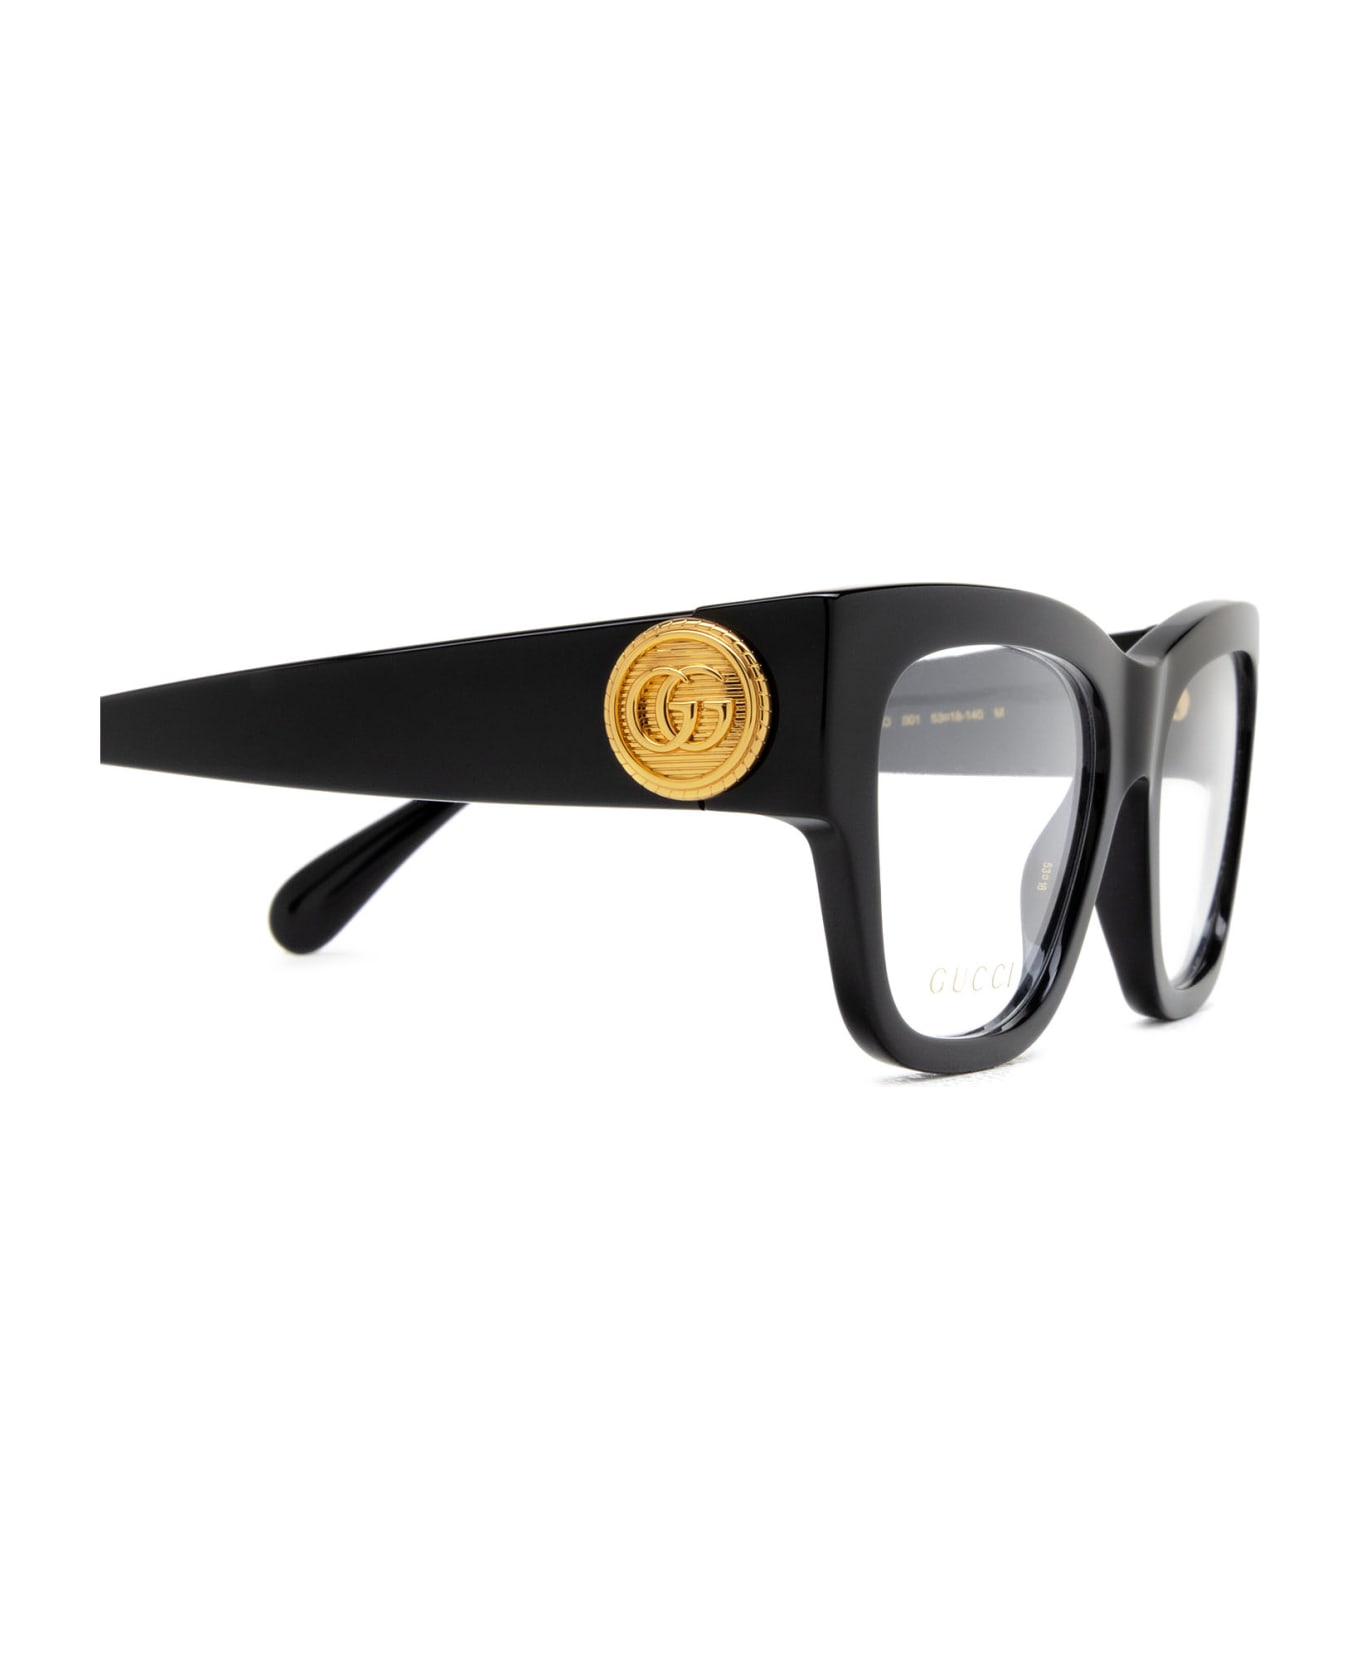 Gucci Eyewear Gg1410o Black Glasses - Black